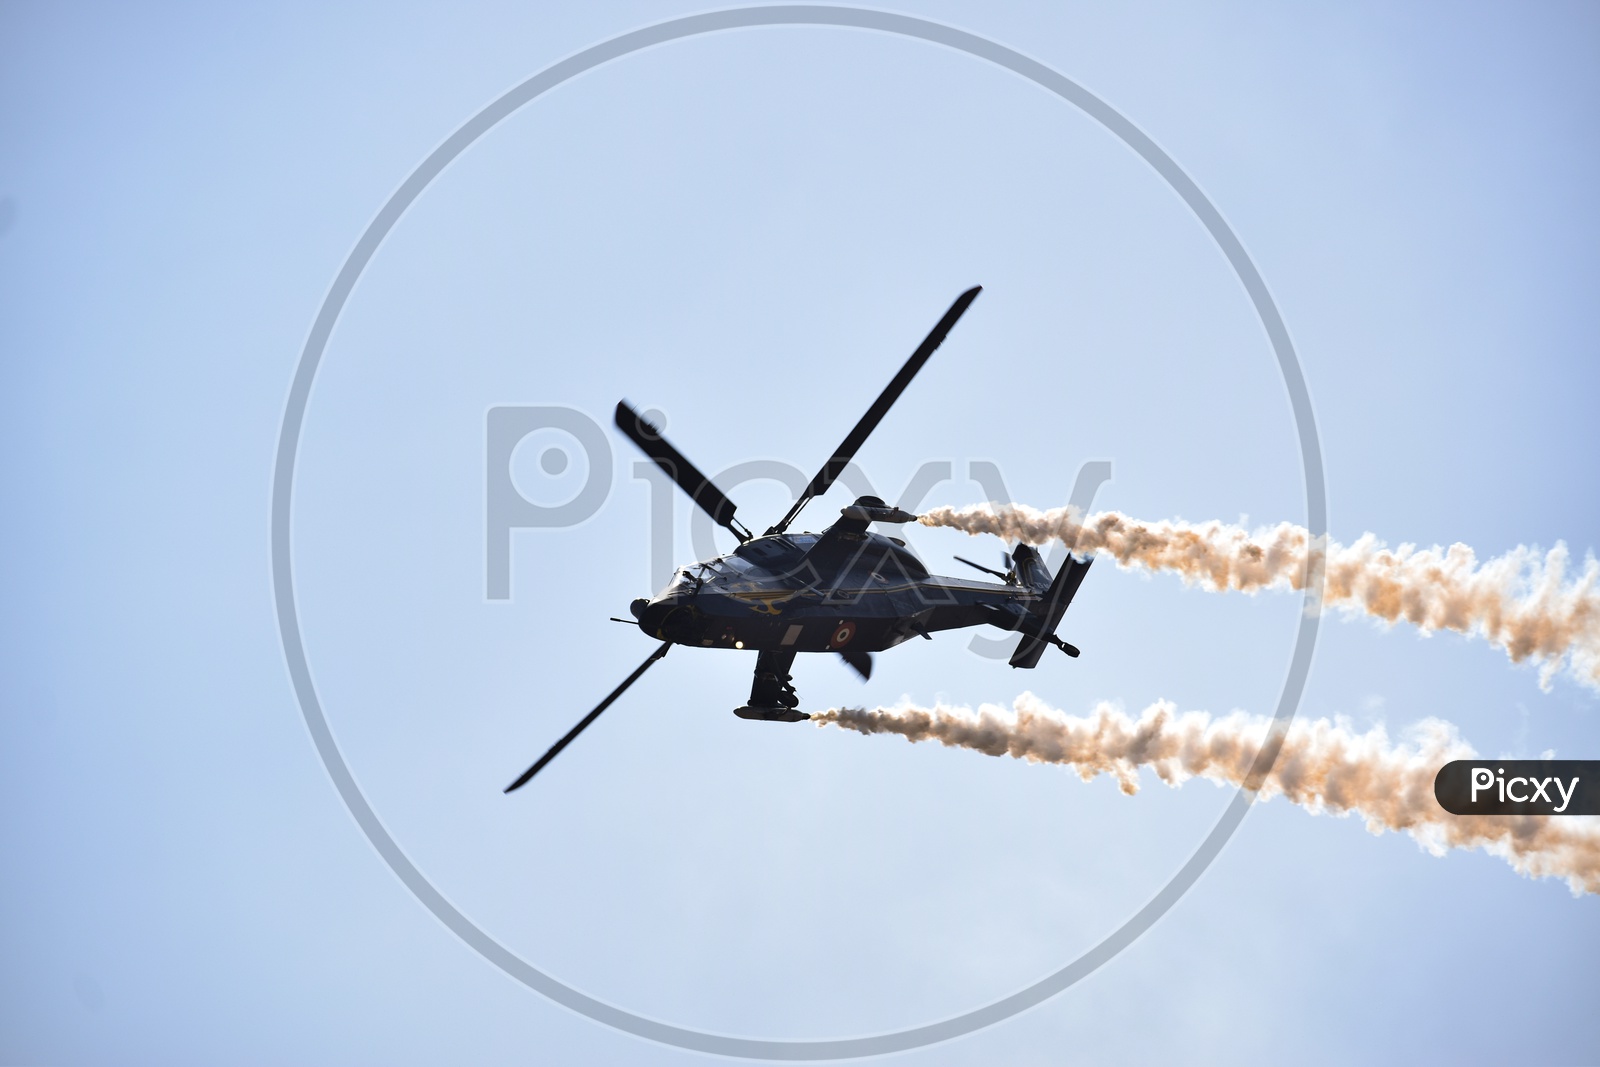 HAL Light Combat Helicopter at Bangalore Aero India Show 2019